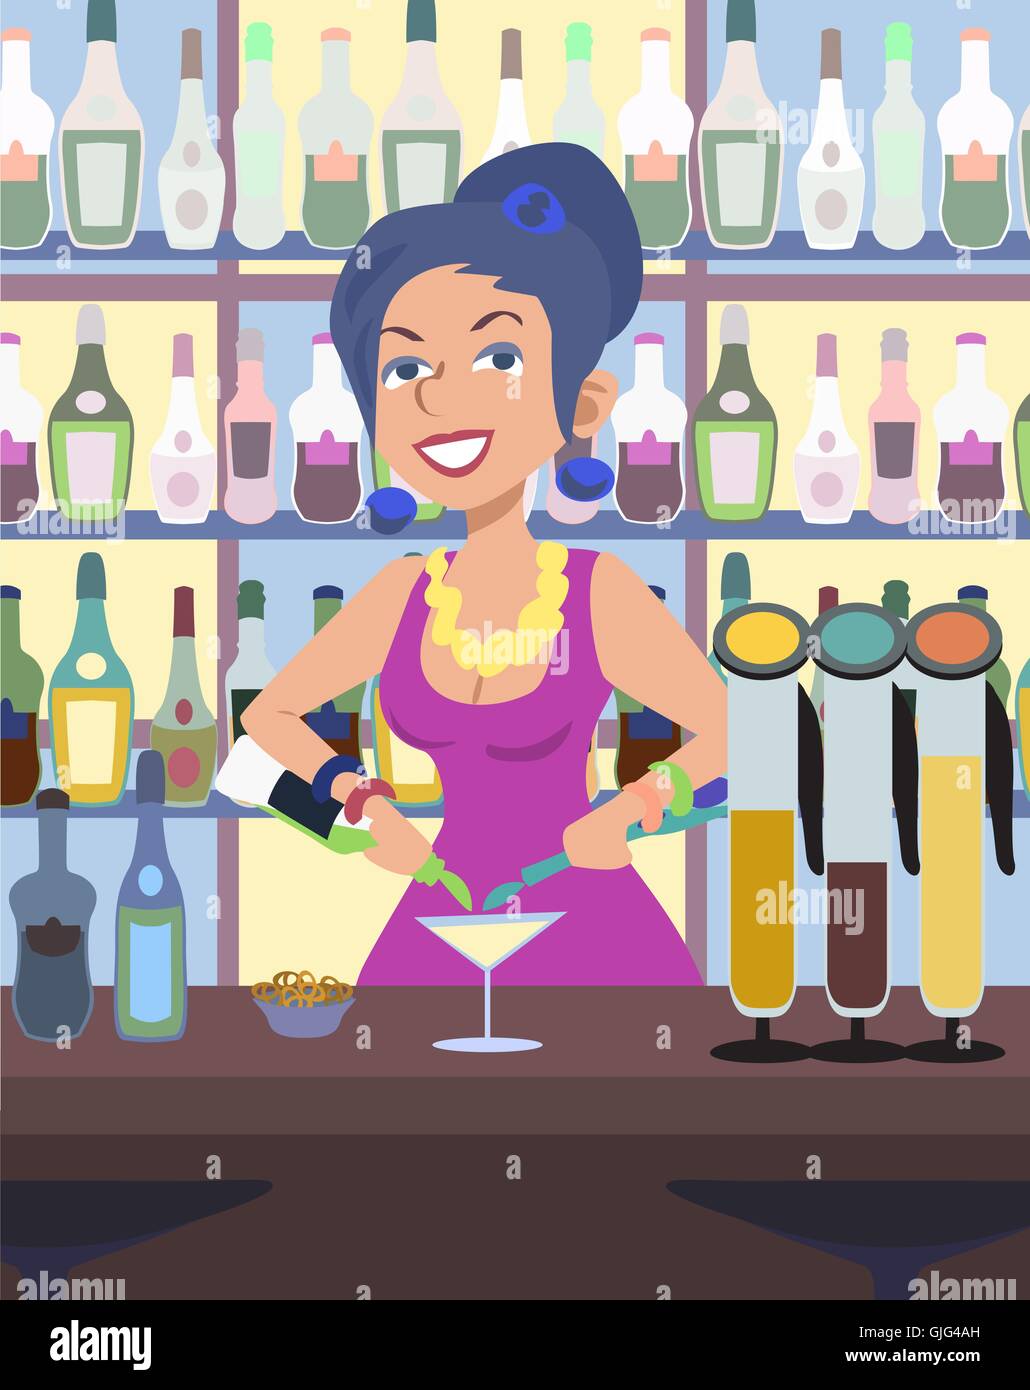 humorous cartoon image of bar-woman serves drinks at a bar Stock Vector